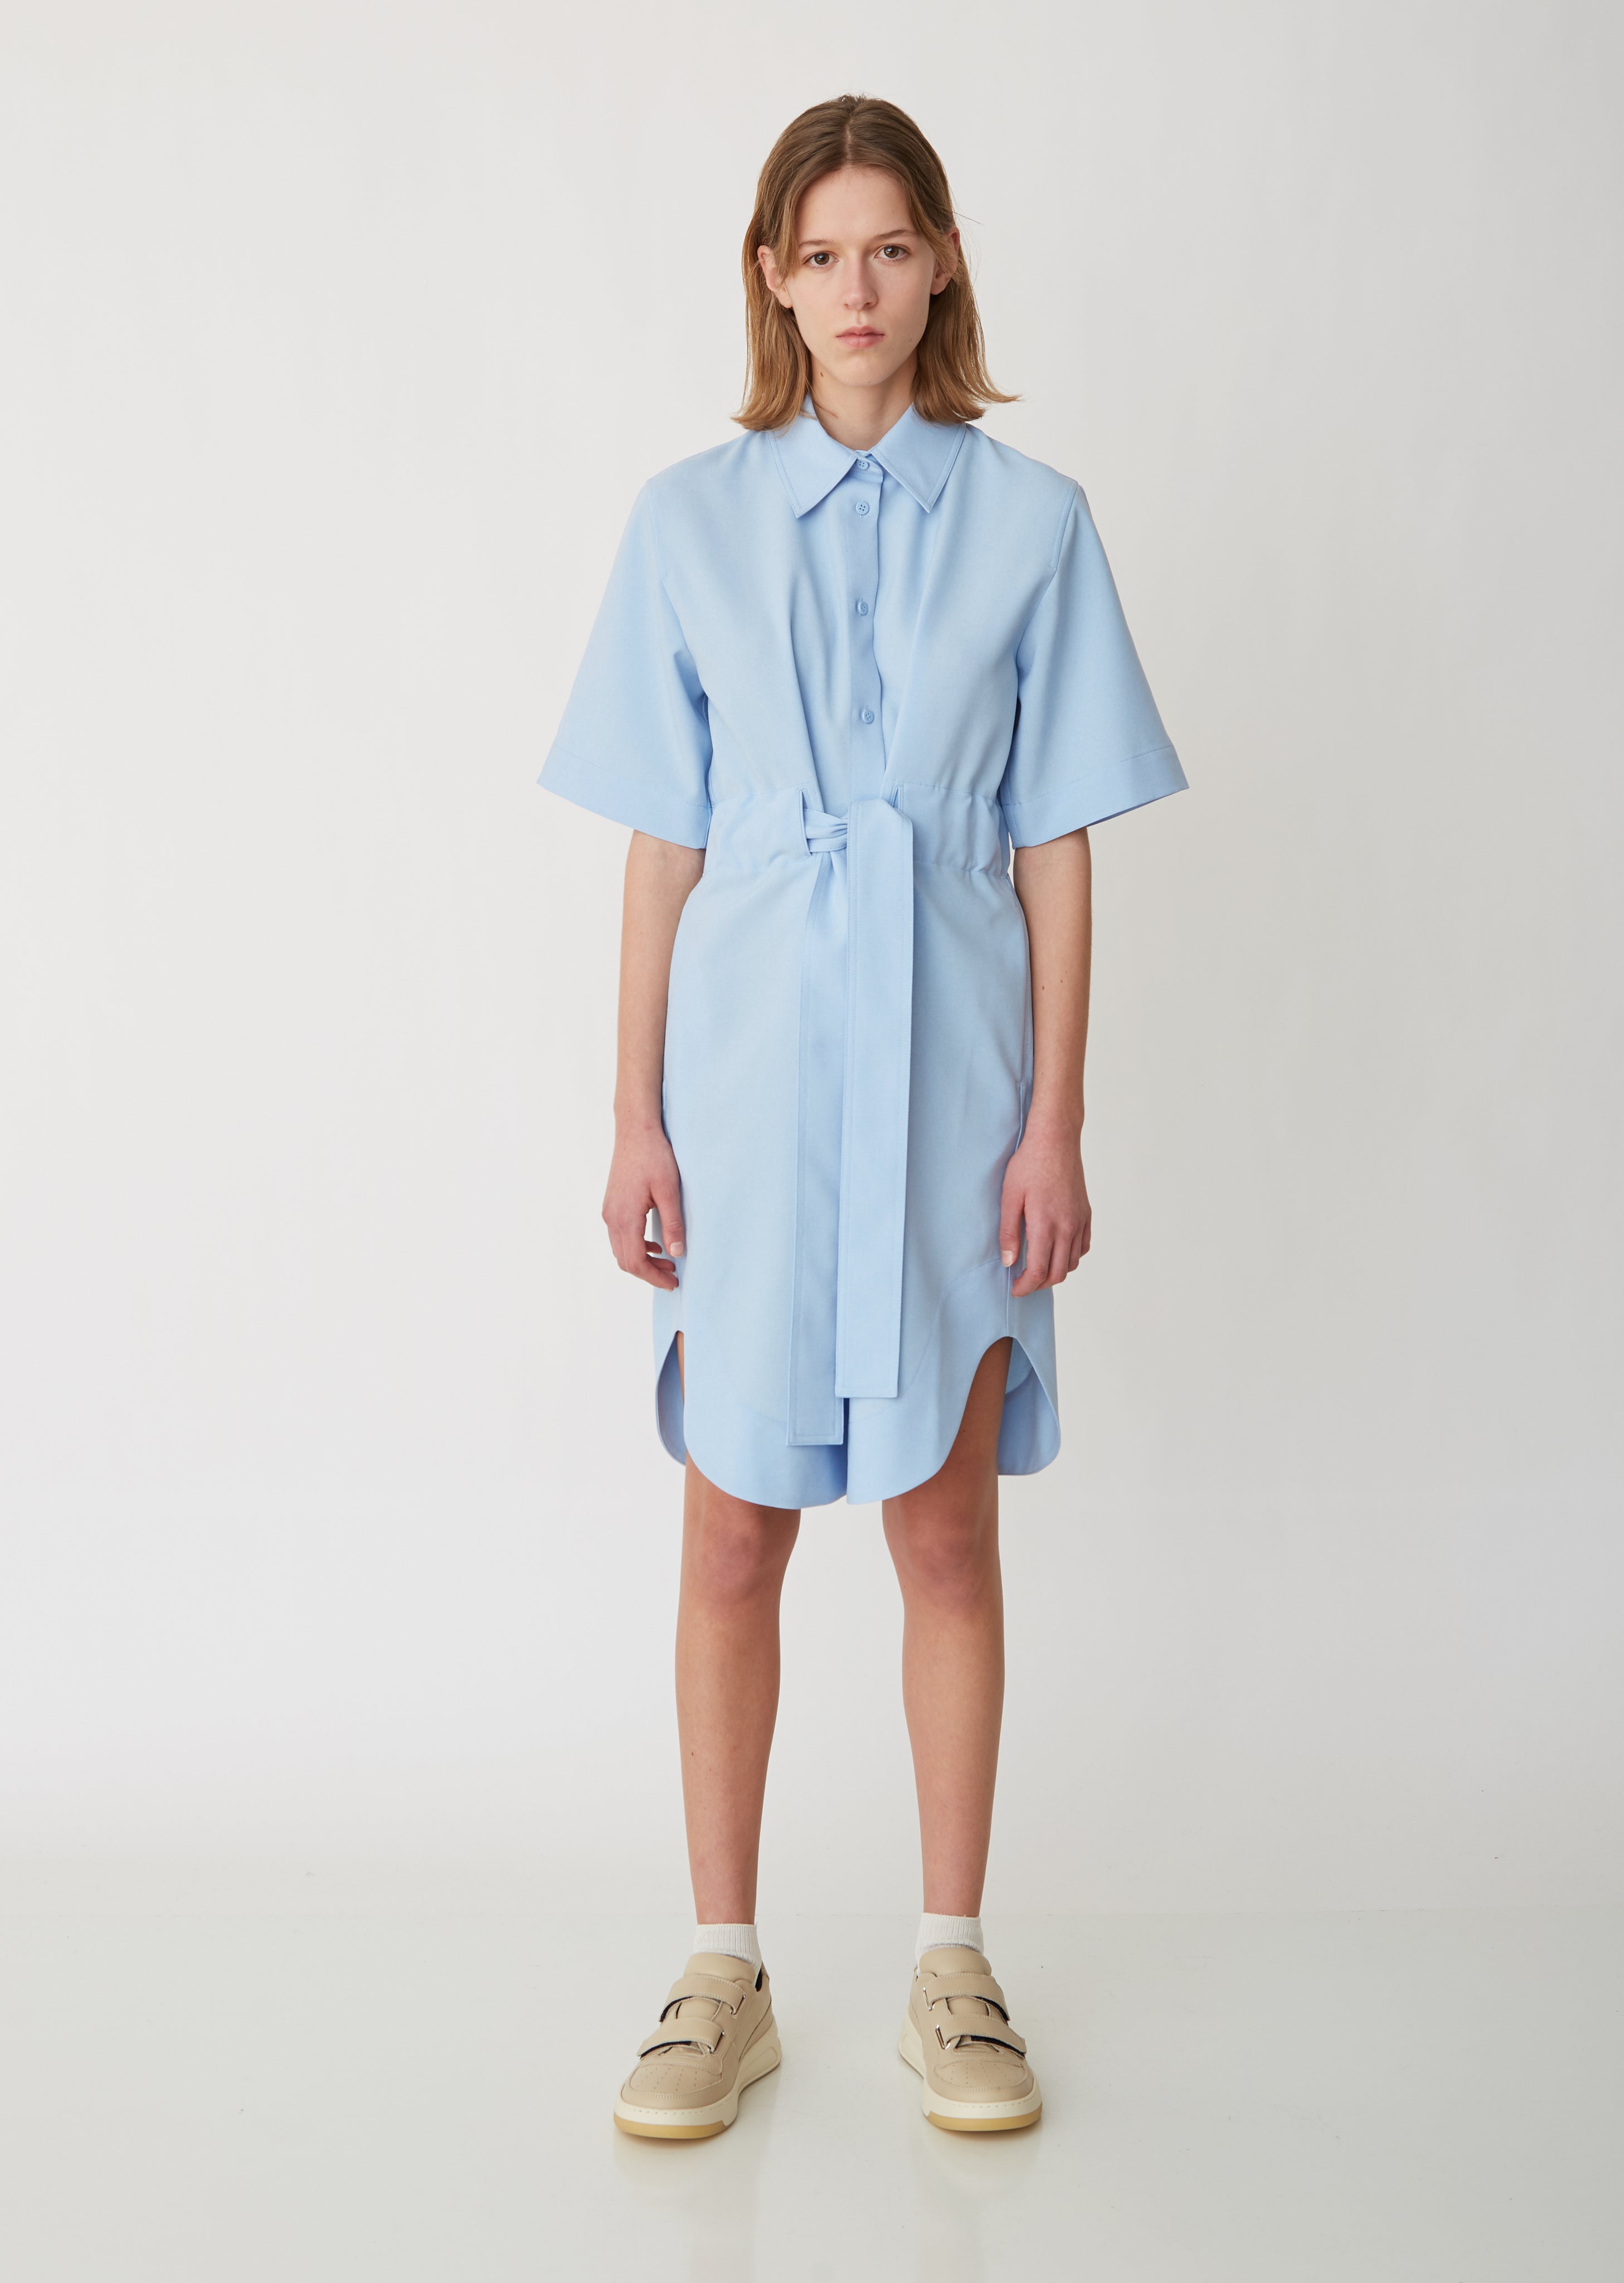 Size36【Acne Studios】 Della shirt dress